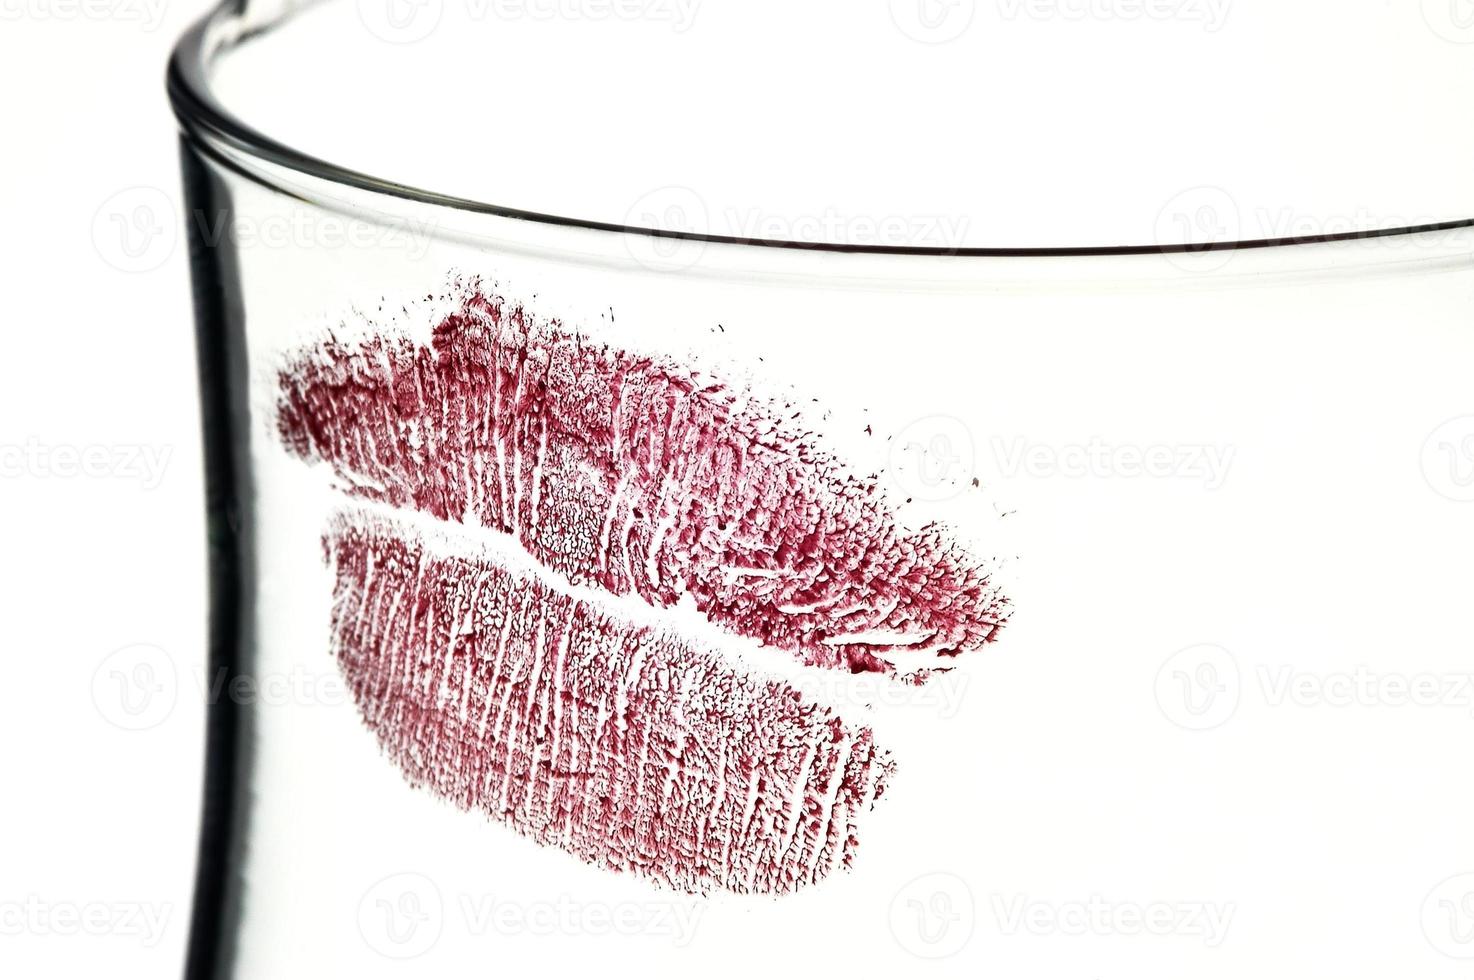 Kiss on glass photo